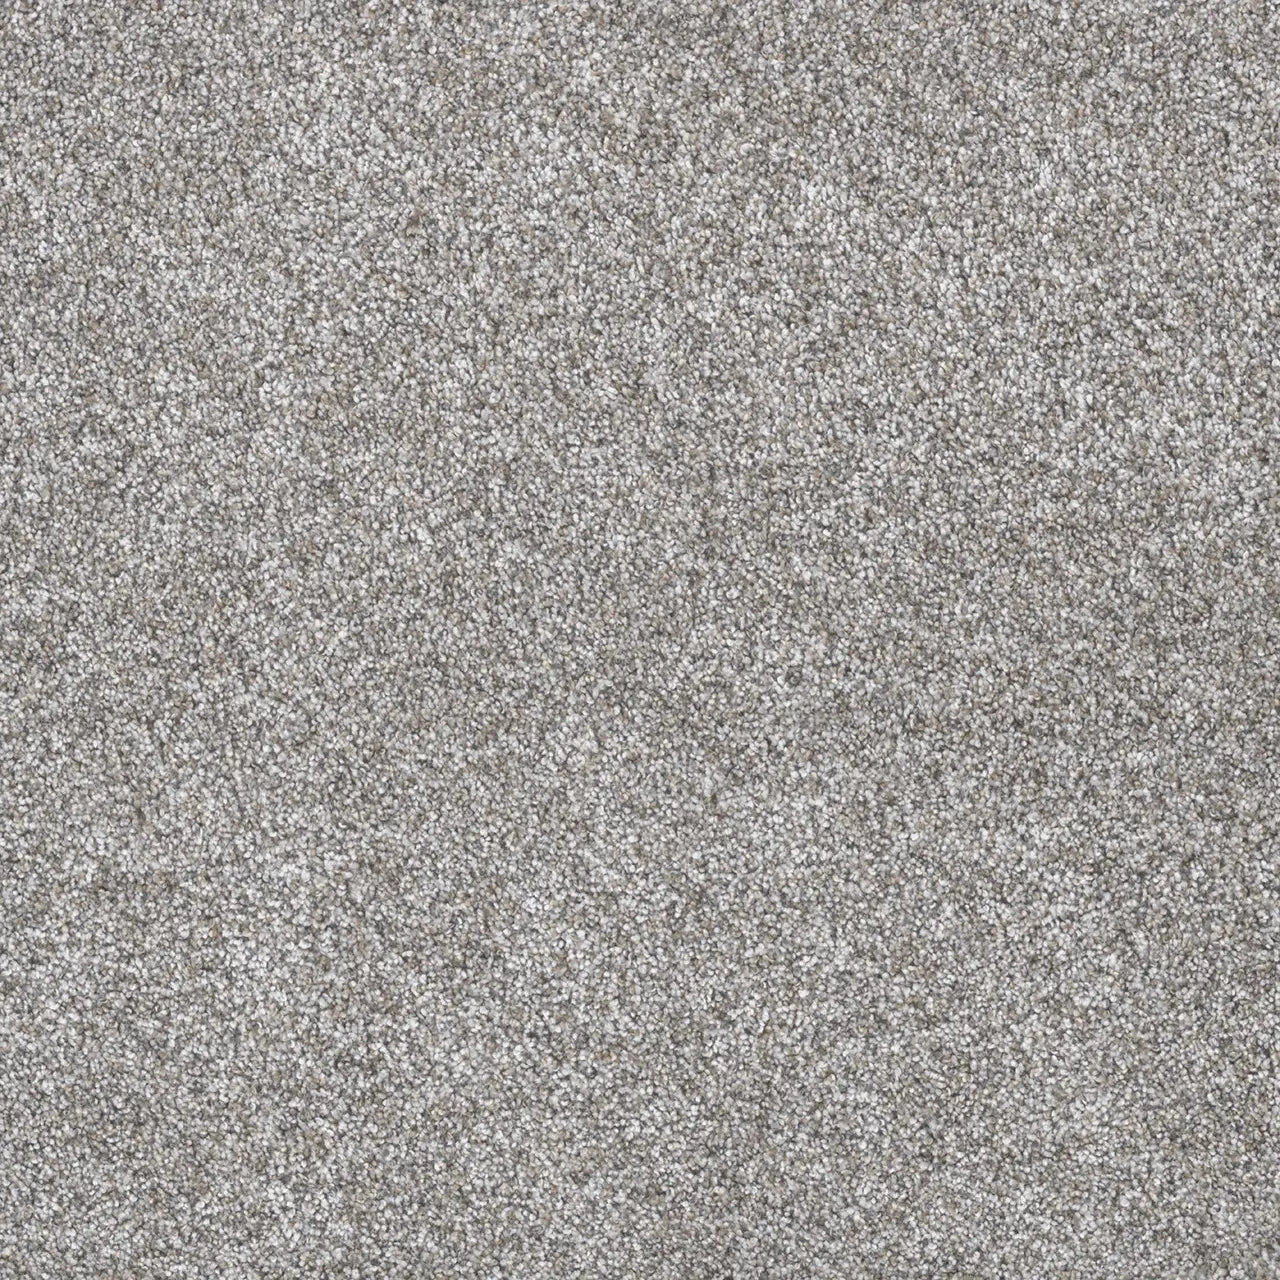 Quartz, Gold Standard III, Carpet by Dreamweaver, Calhoun's Flooring Springfield, IL